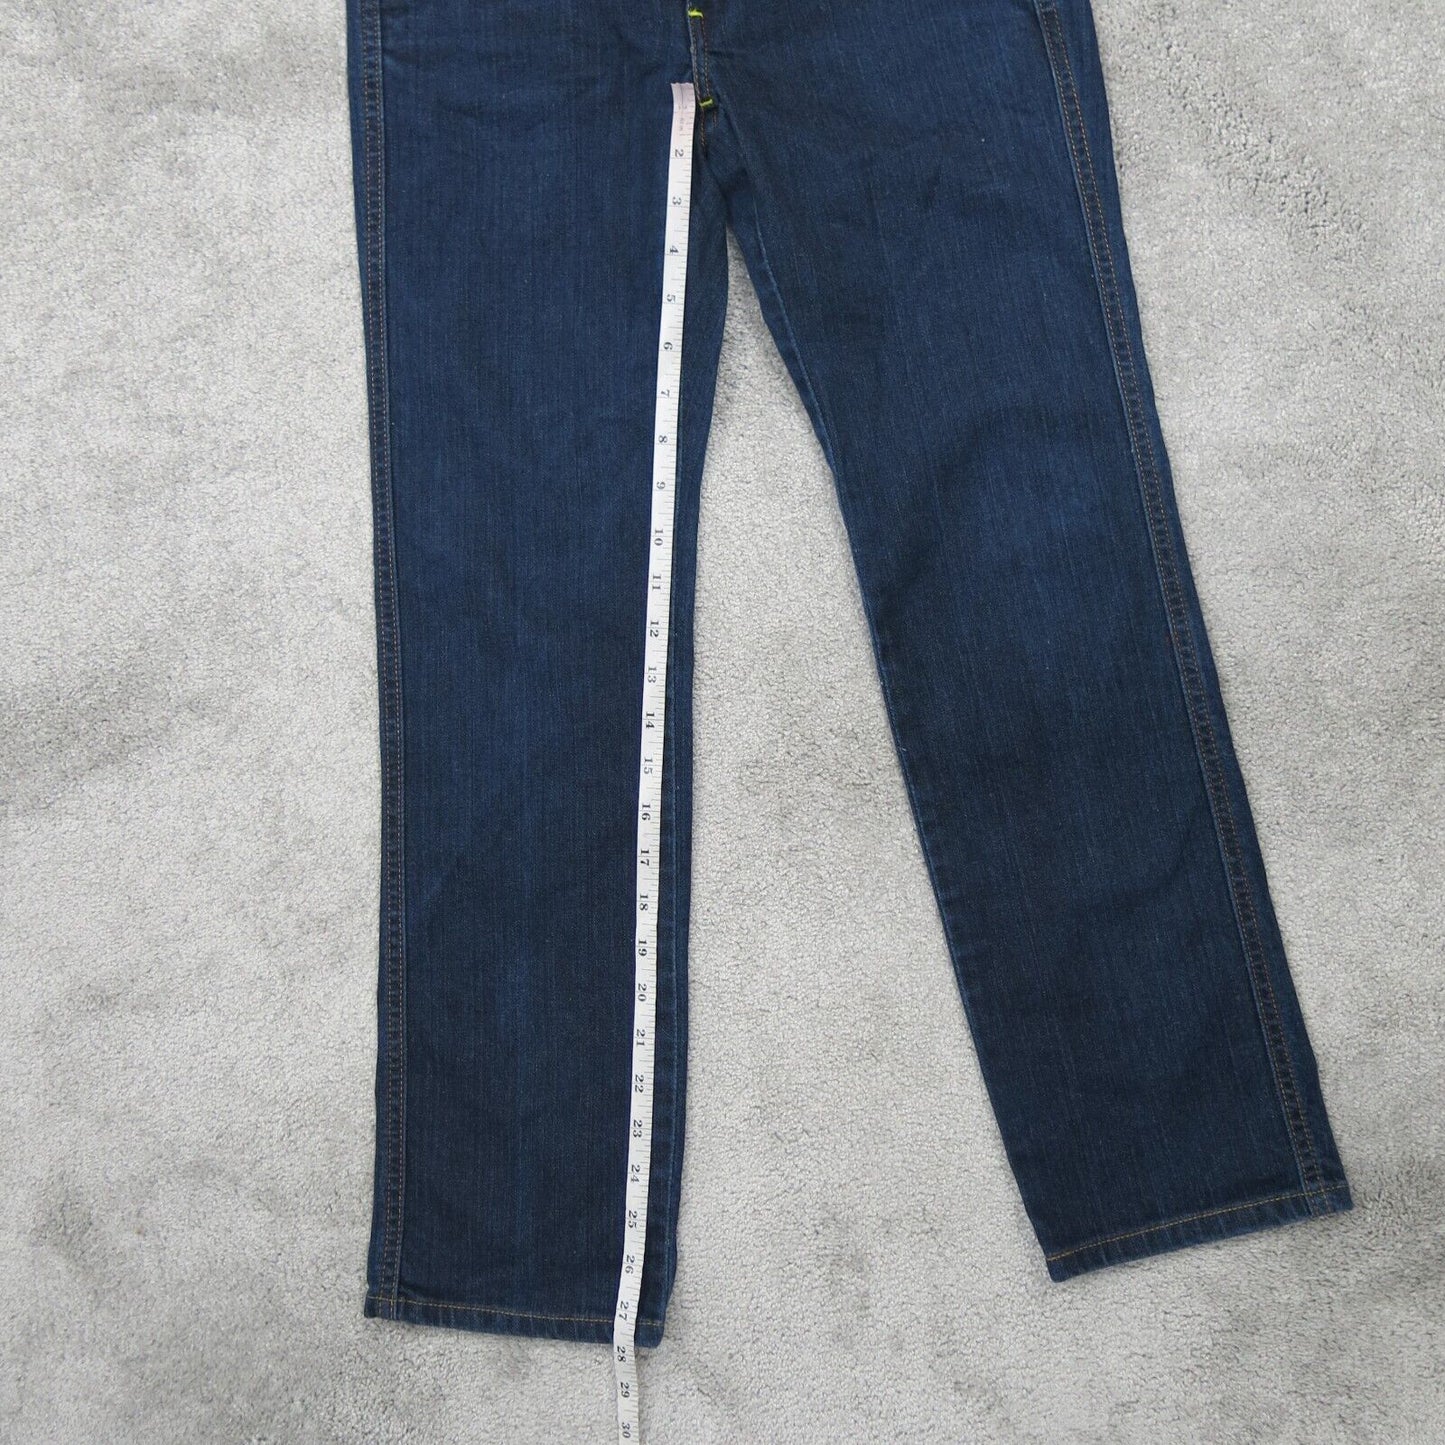 Levis Womens Slim Straight Jeans Denim Stretch Low Rise Blue Size W29 X L30